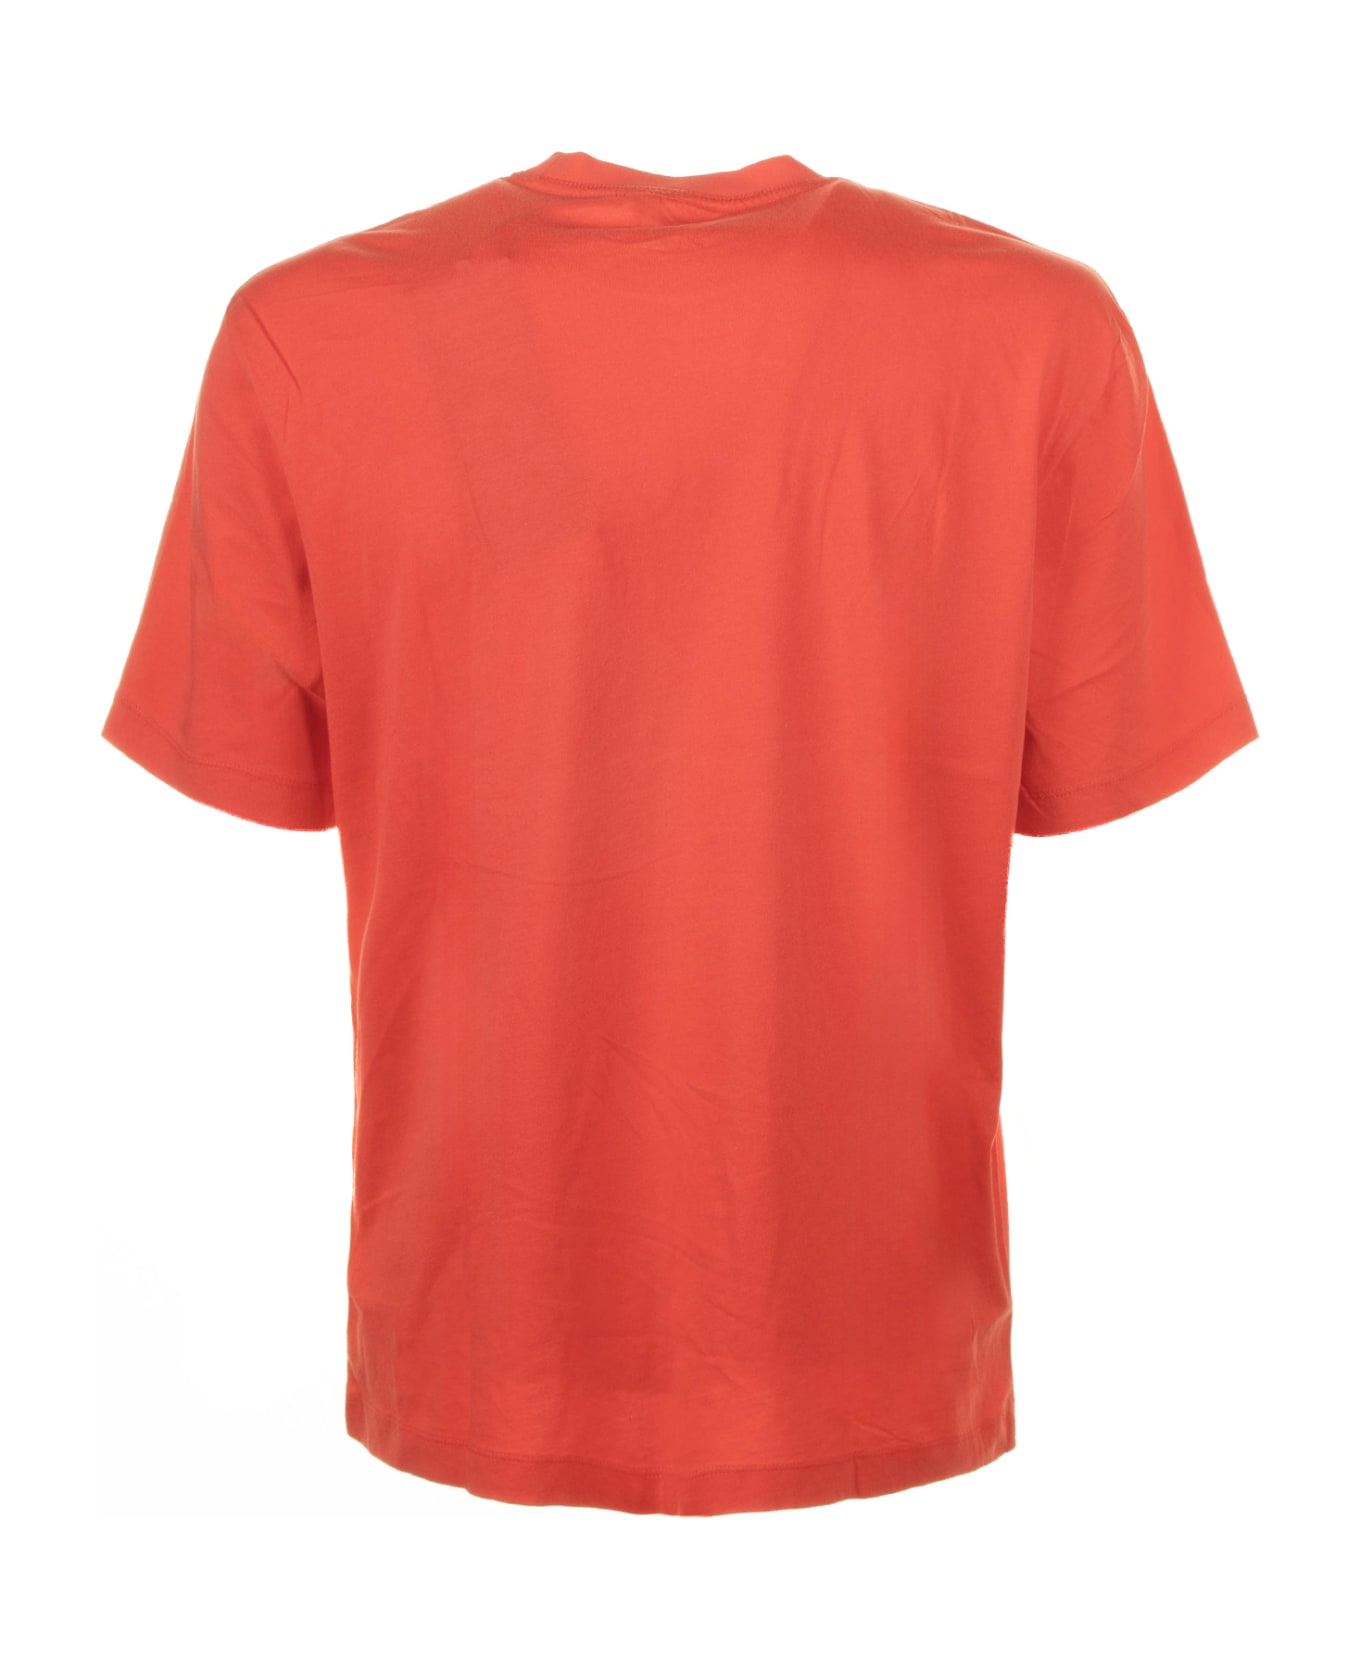 Blauer Orange Cotton T-shirt - ARANCIO ACIDO